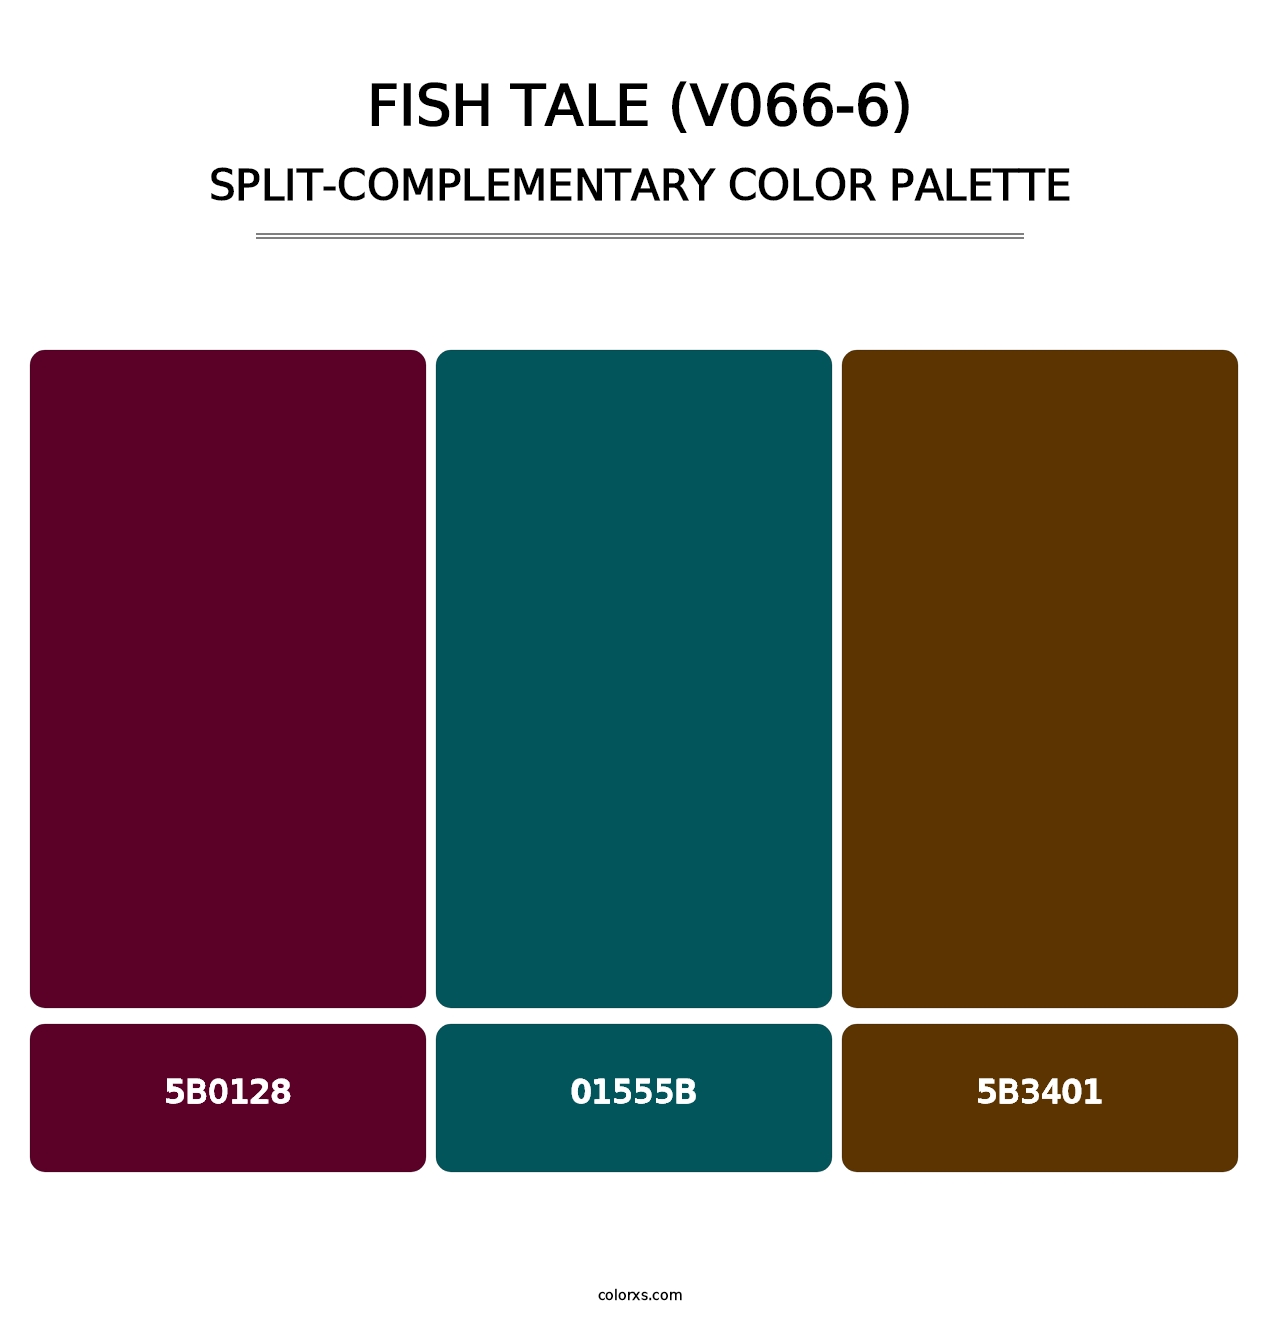 Fish Tale (V066-6) - Split-Complementary Color Palette